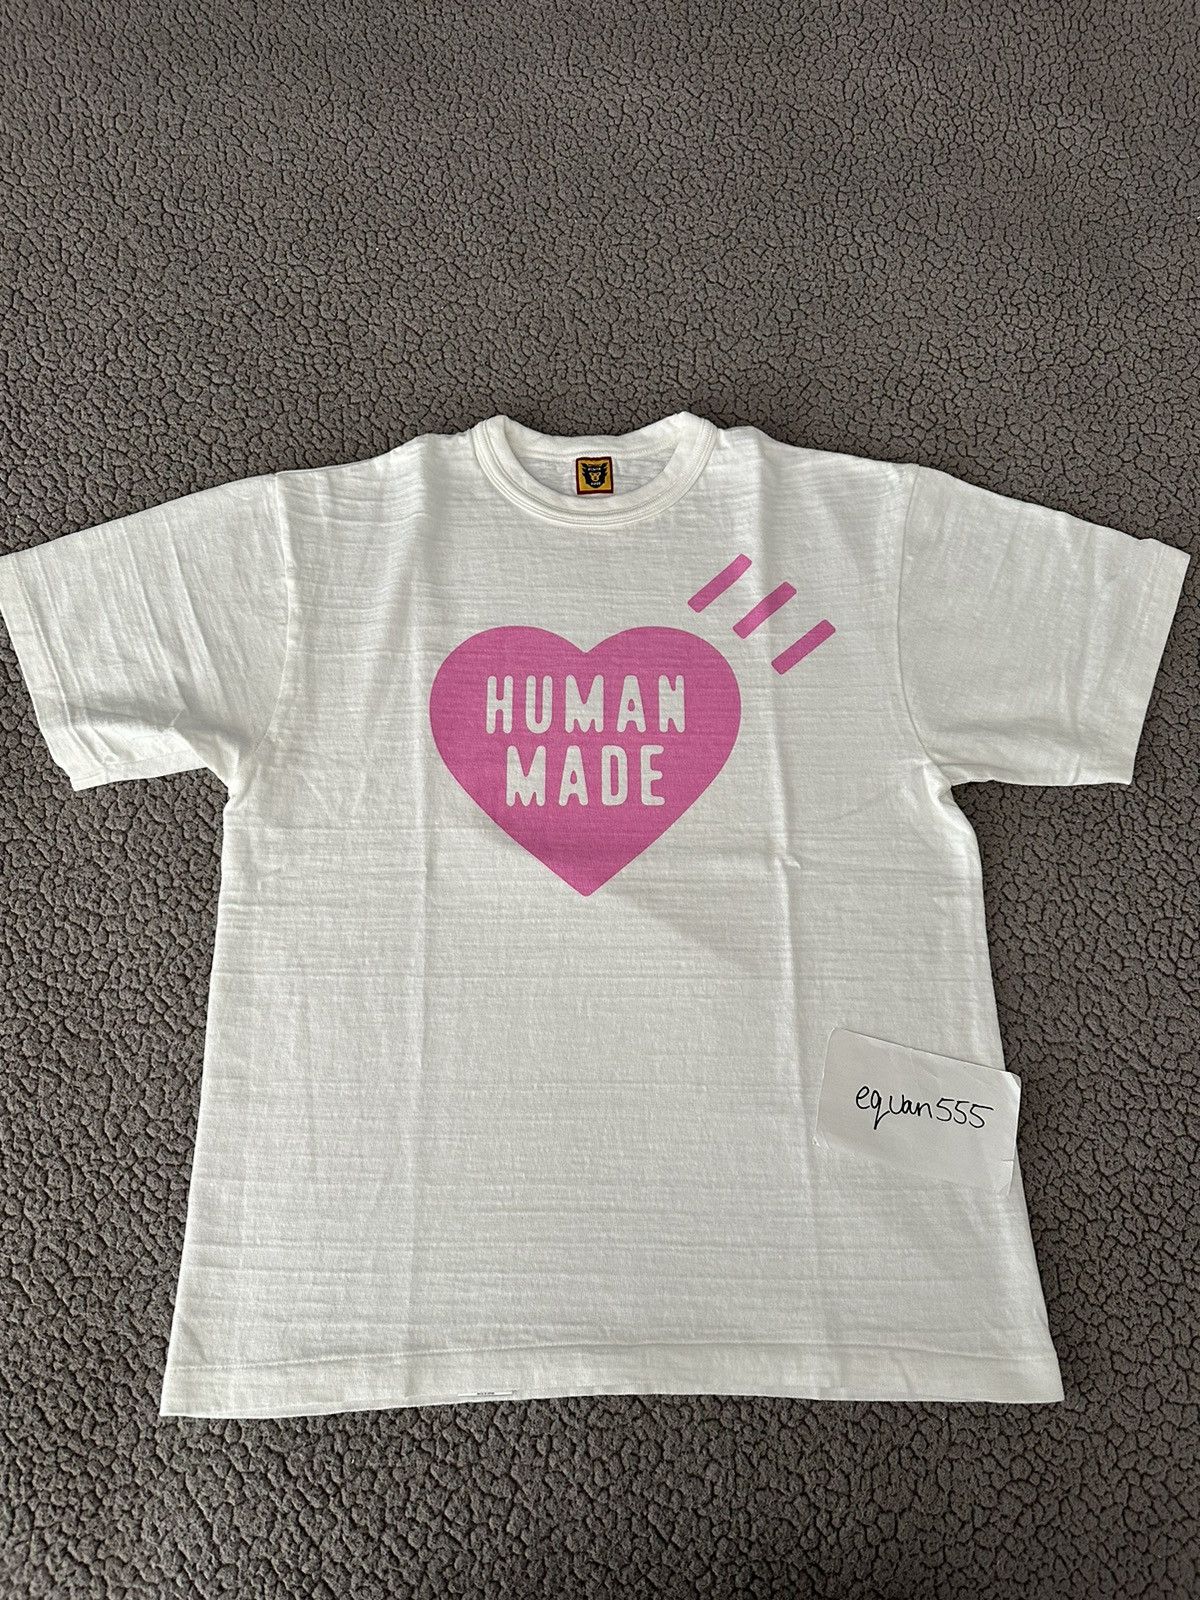 Human Made Human Made Harajuku Pink Heart Tee T Shirt | Grailed